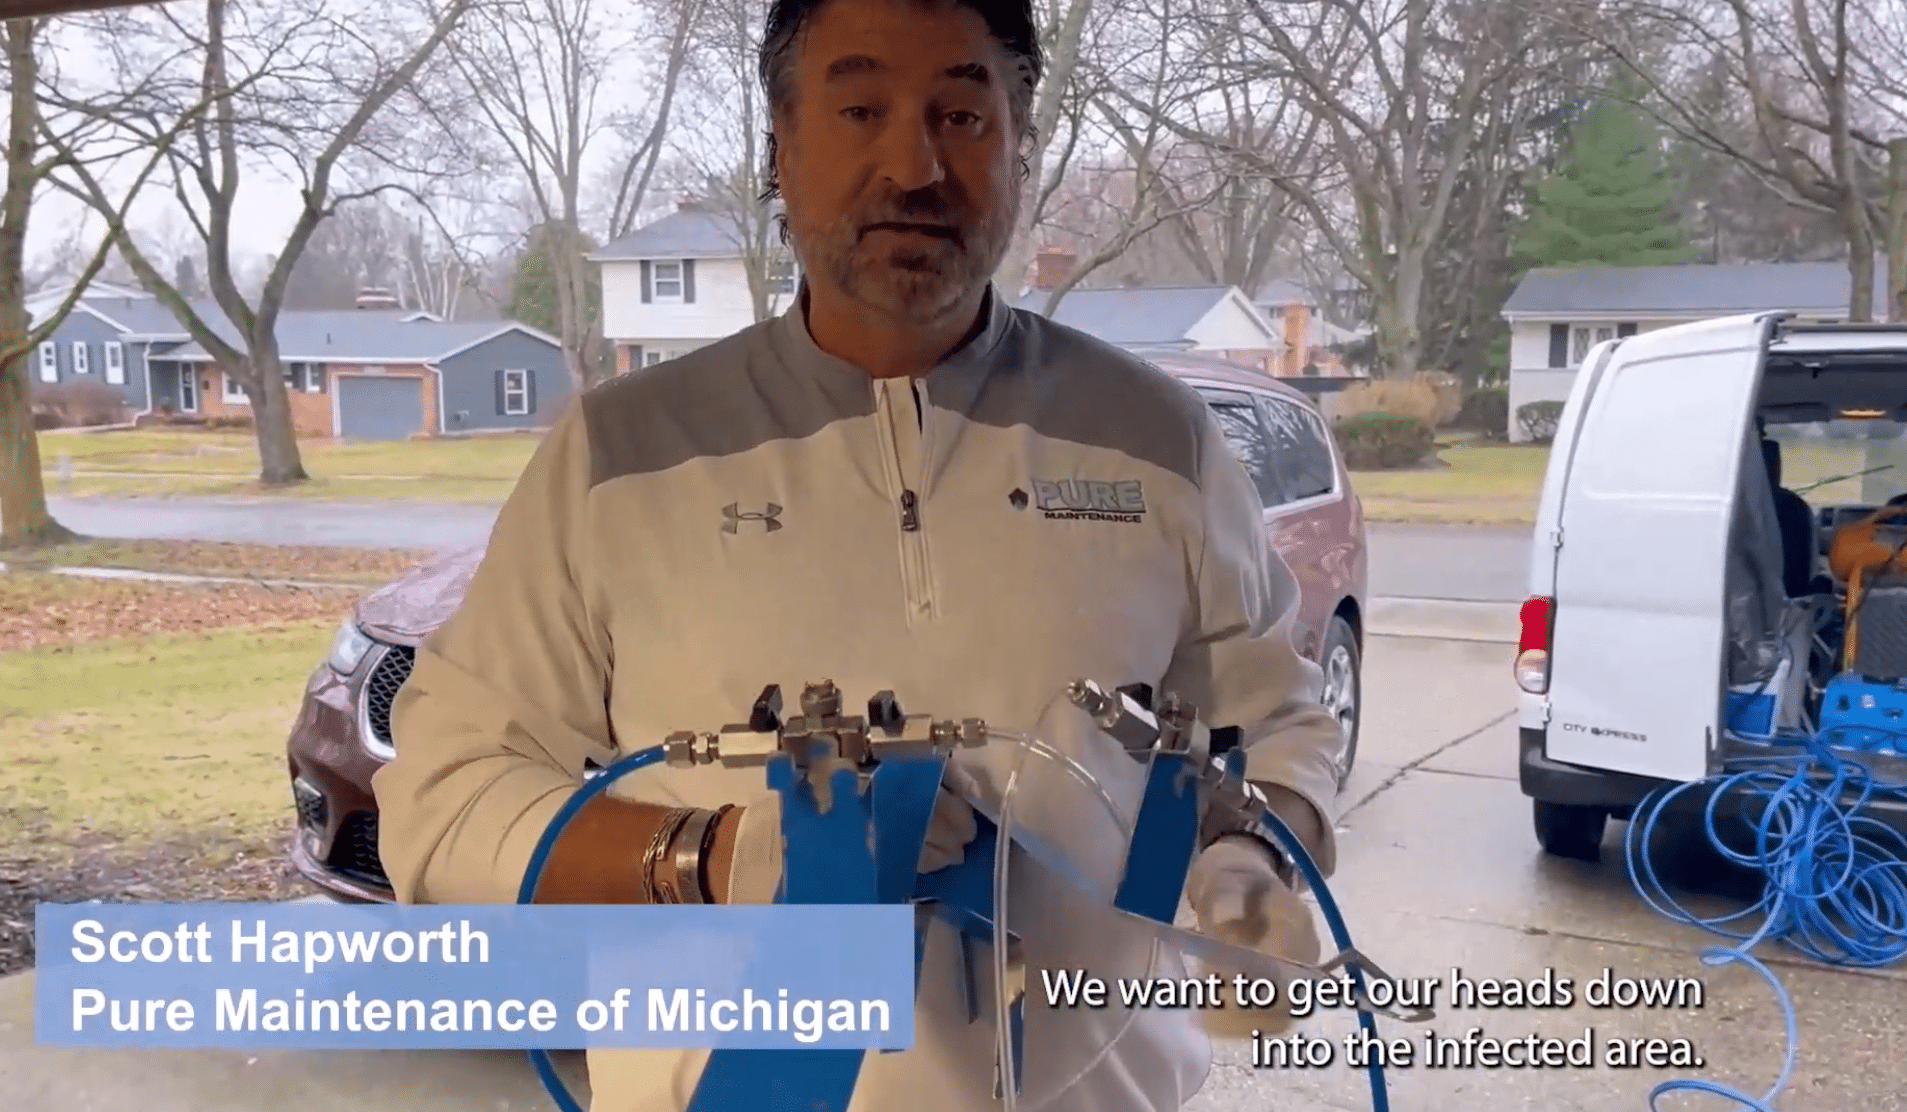 Scott Hapworth performing Mold Remediation in a crawlspace in Ann Arbor Michigan